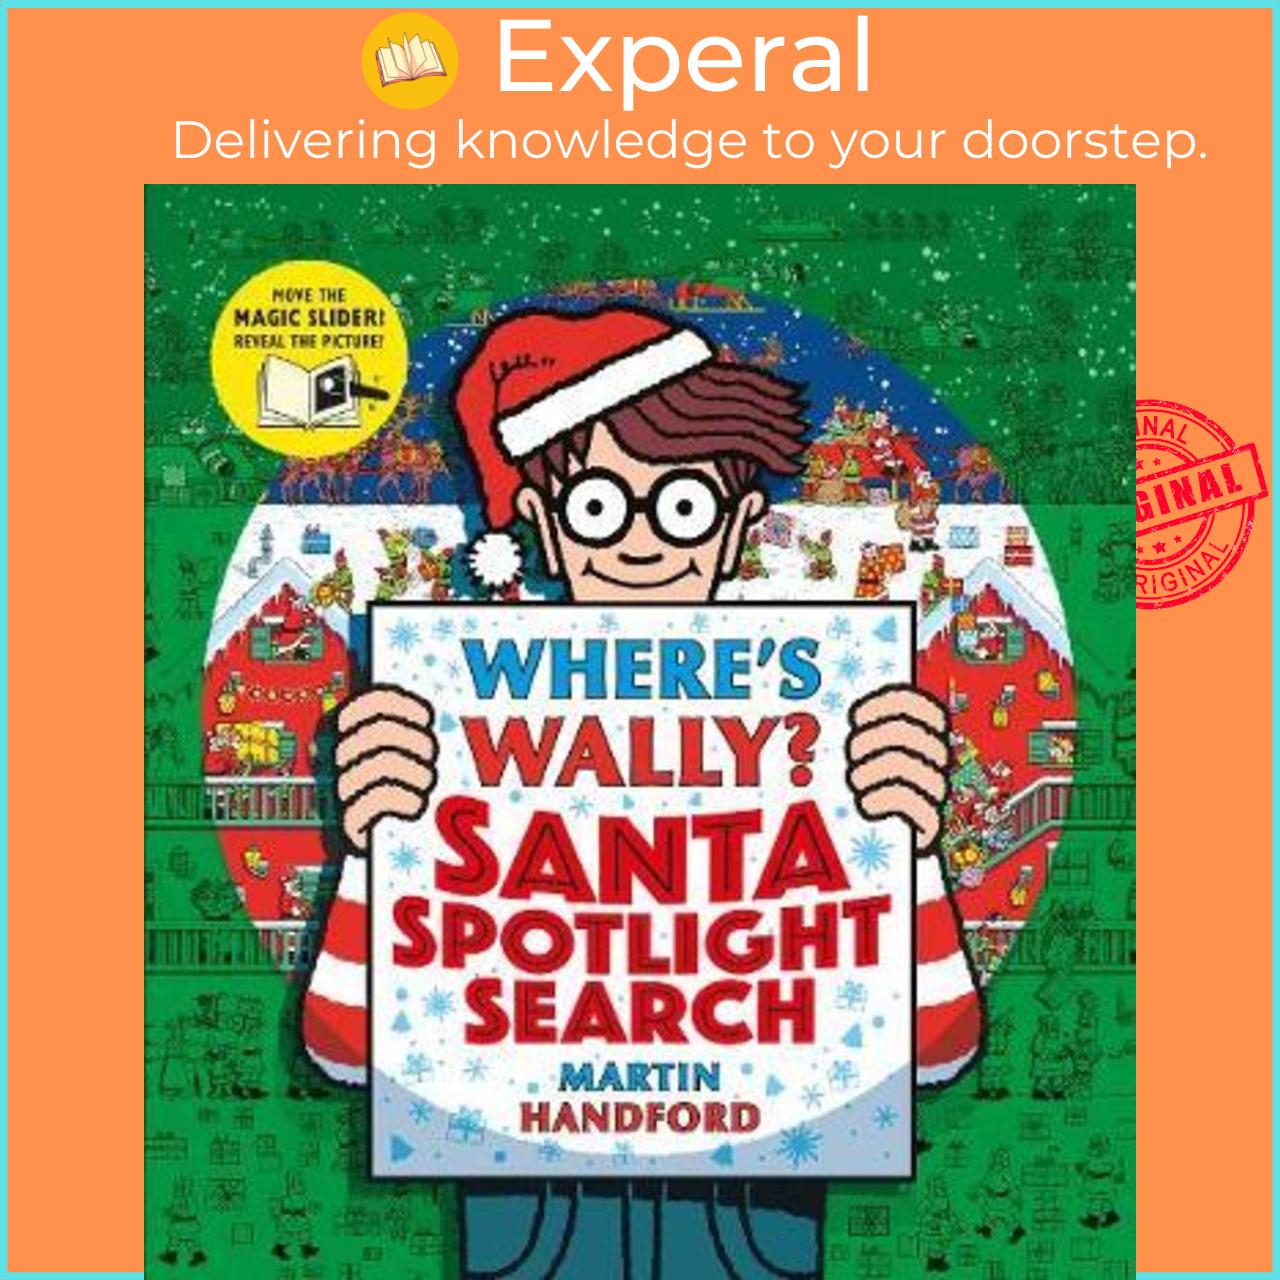 Hình ảnh Sách - Where's Wally? Santa Spotlight Search by Martin Handford (UK edition, hardcover)